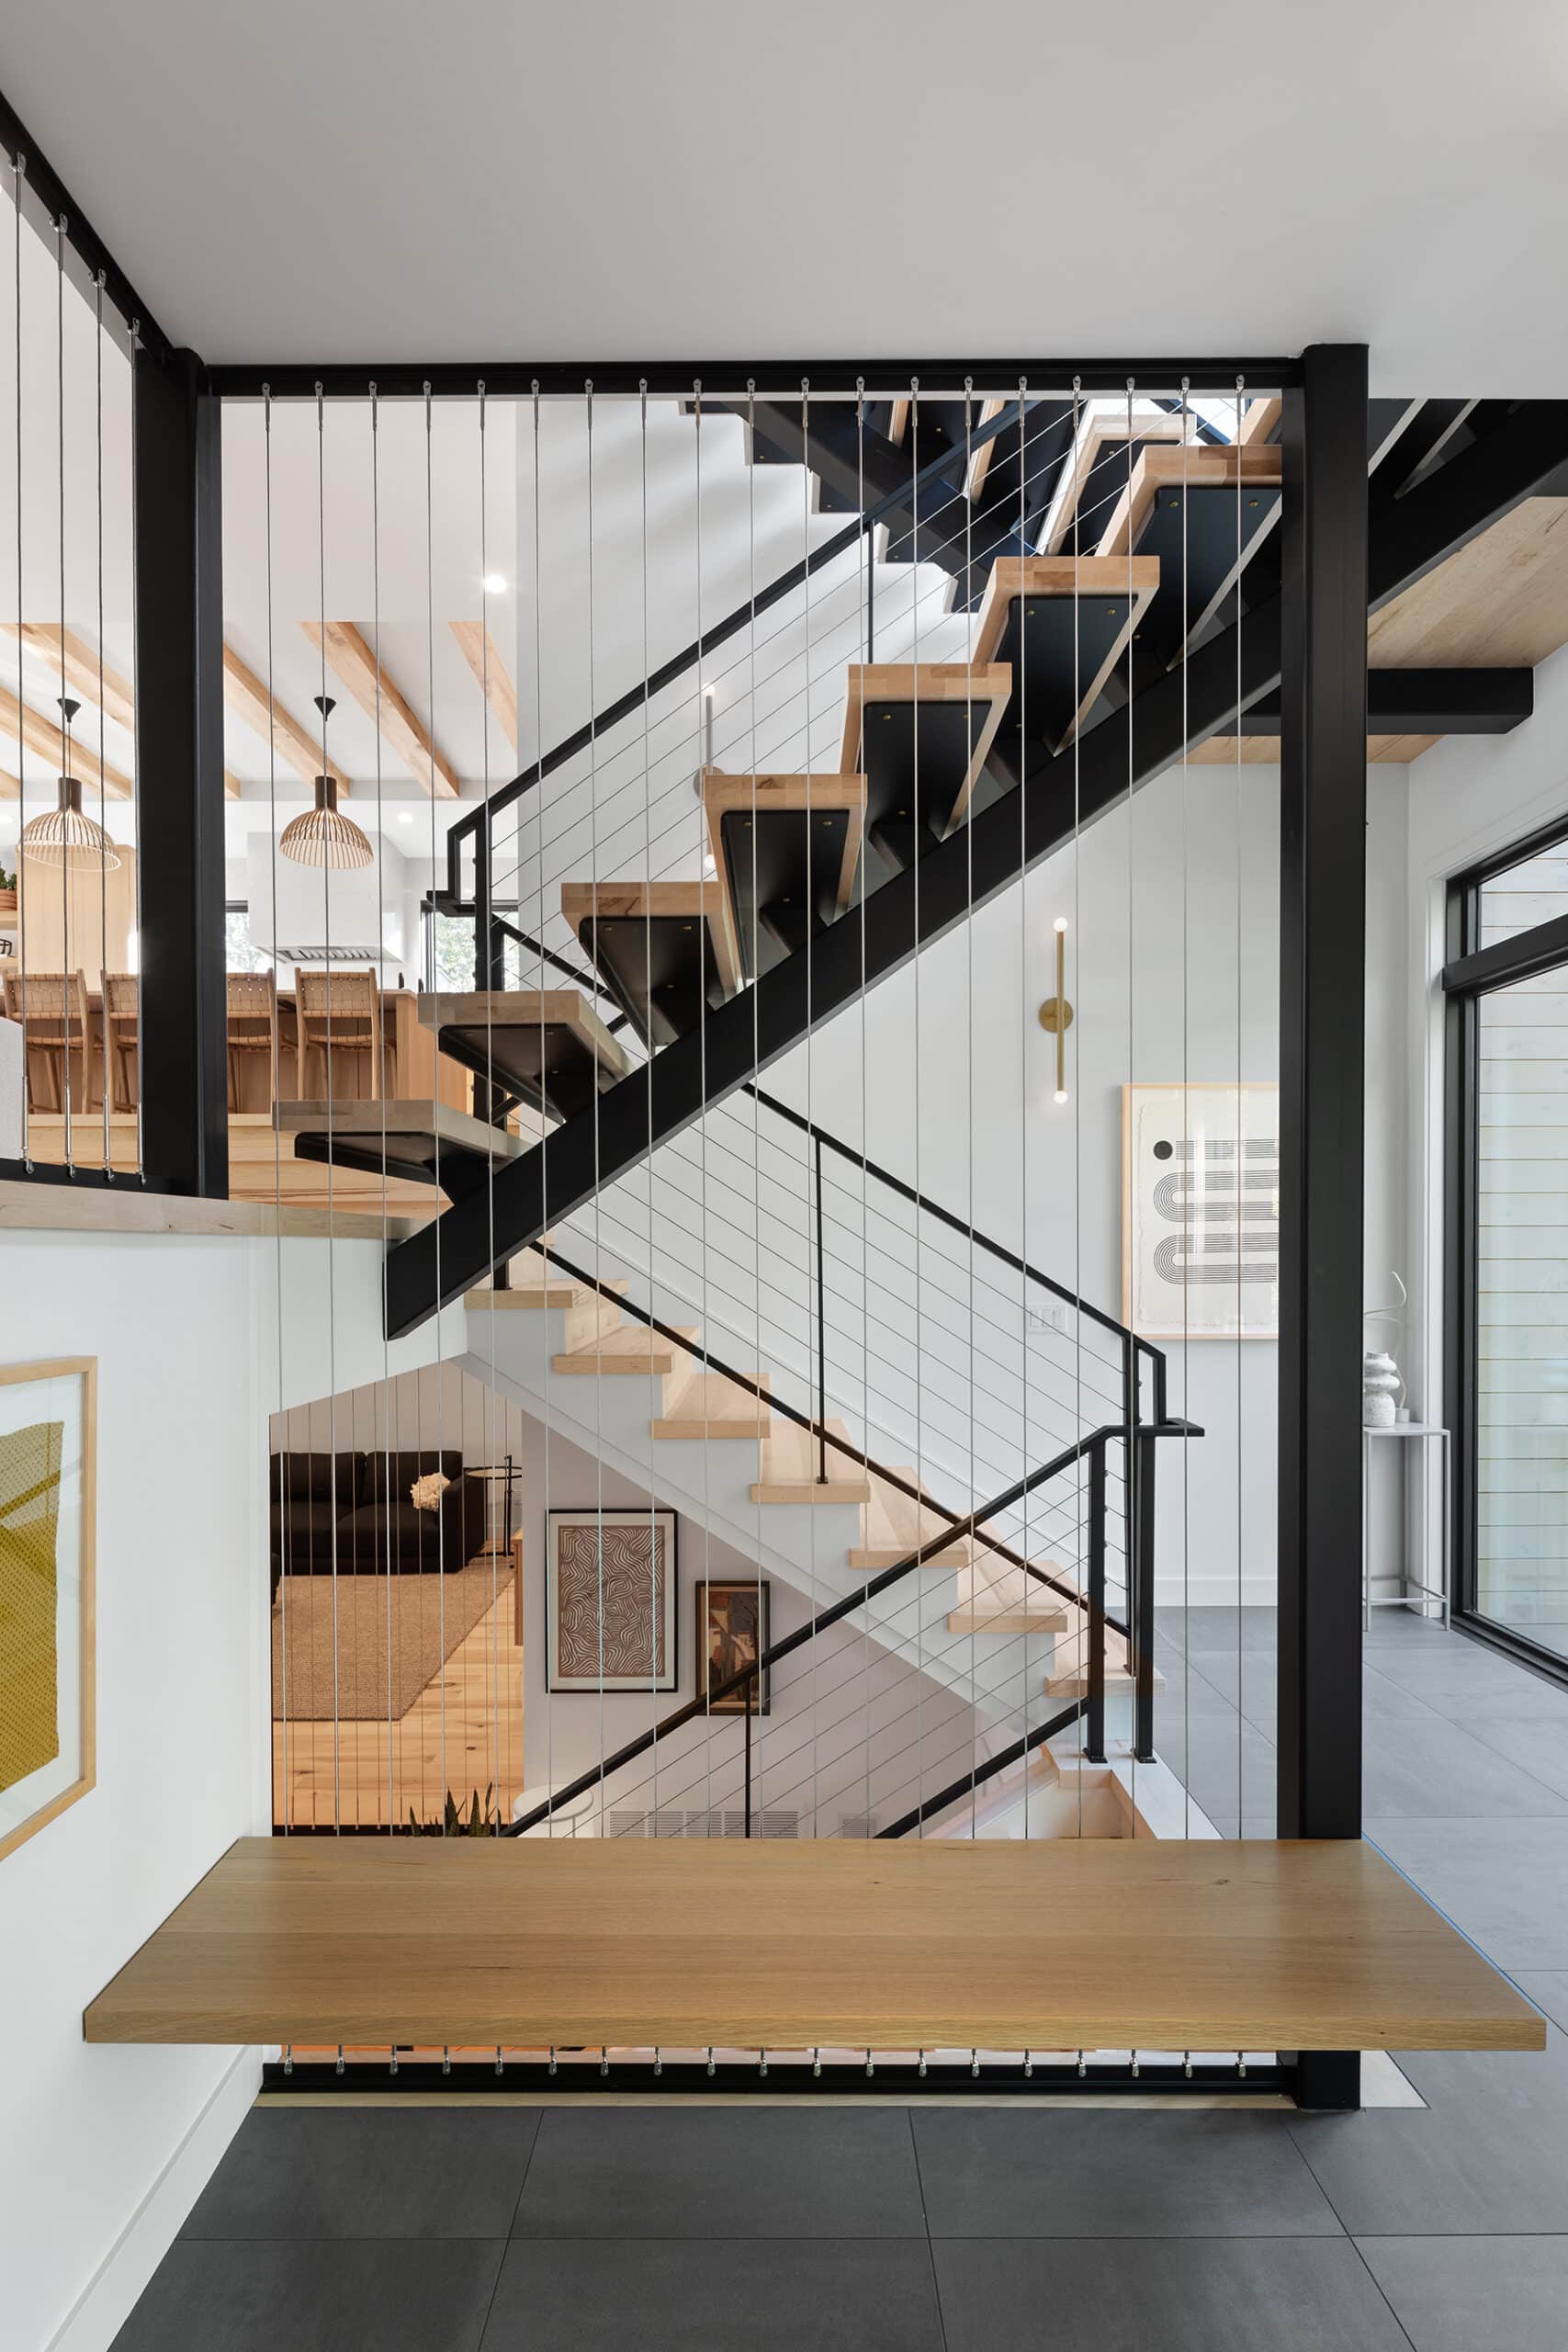 David Charlez Designs custom staircase and interior